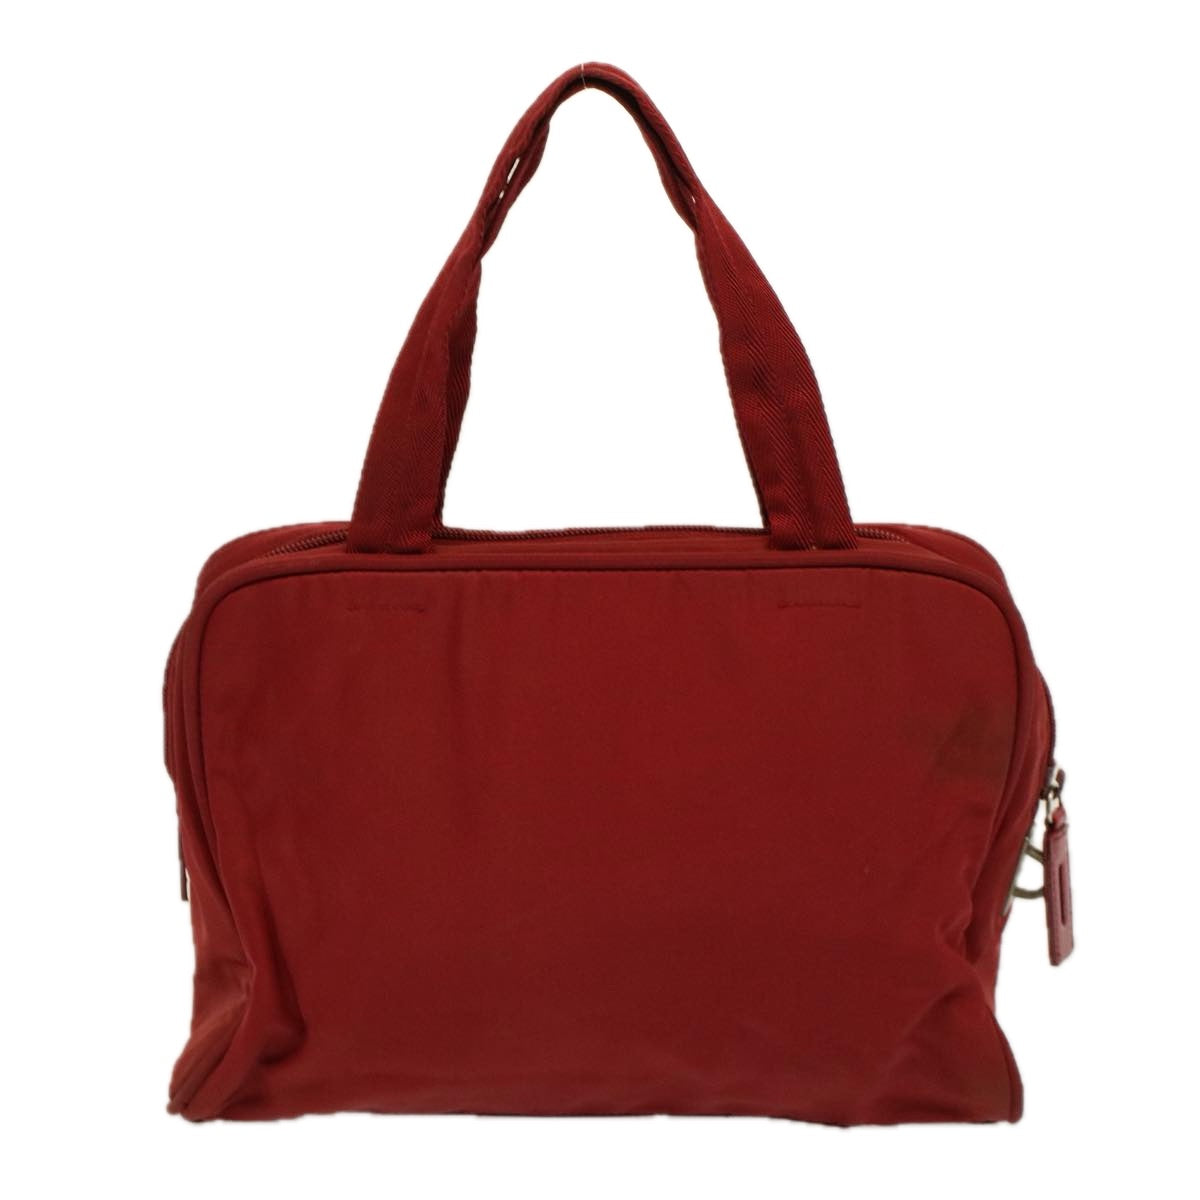 PRADA Hand Bag Nylon Red Auth 58767